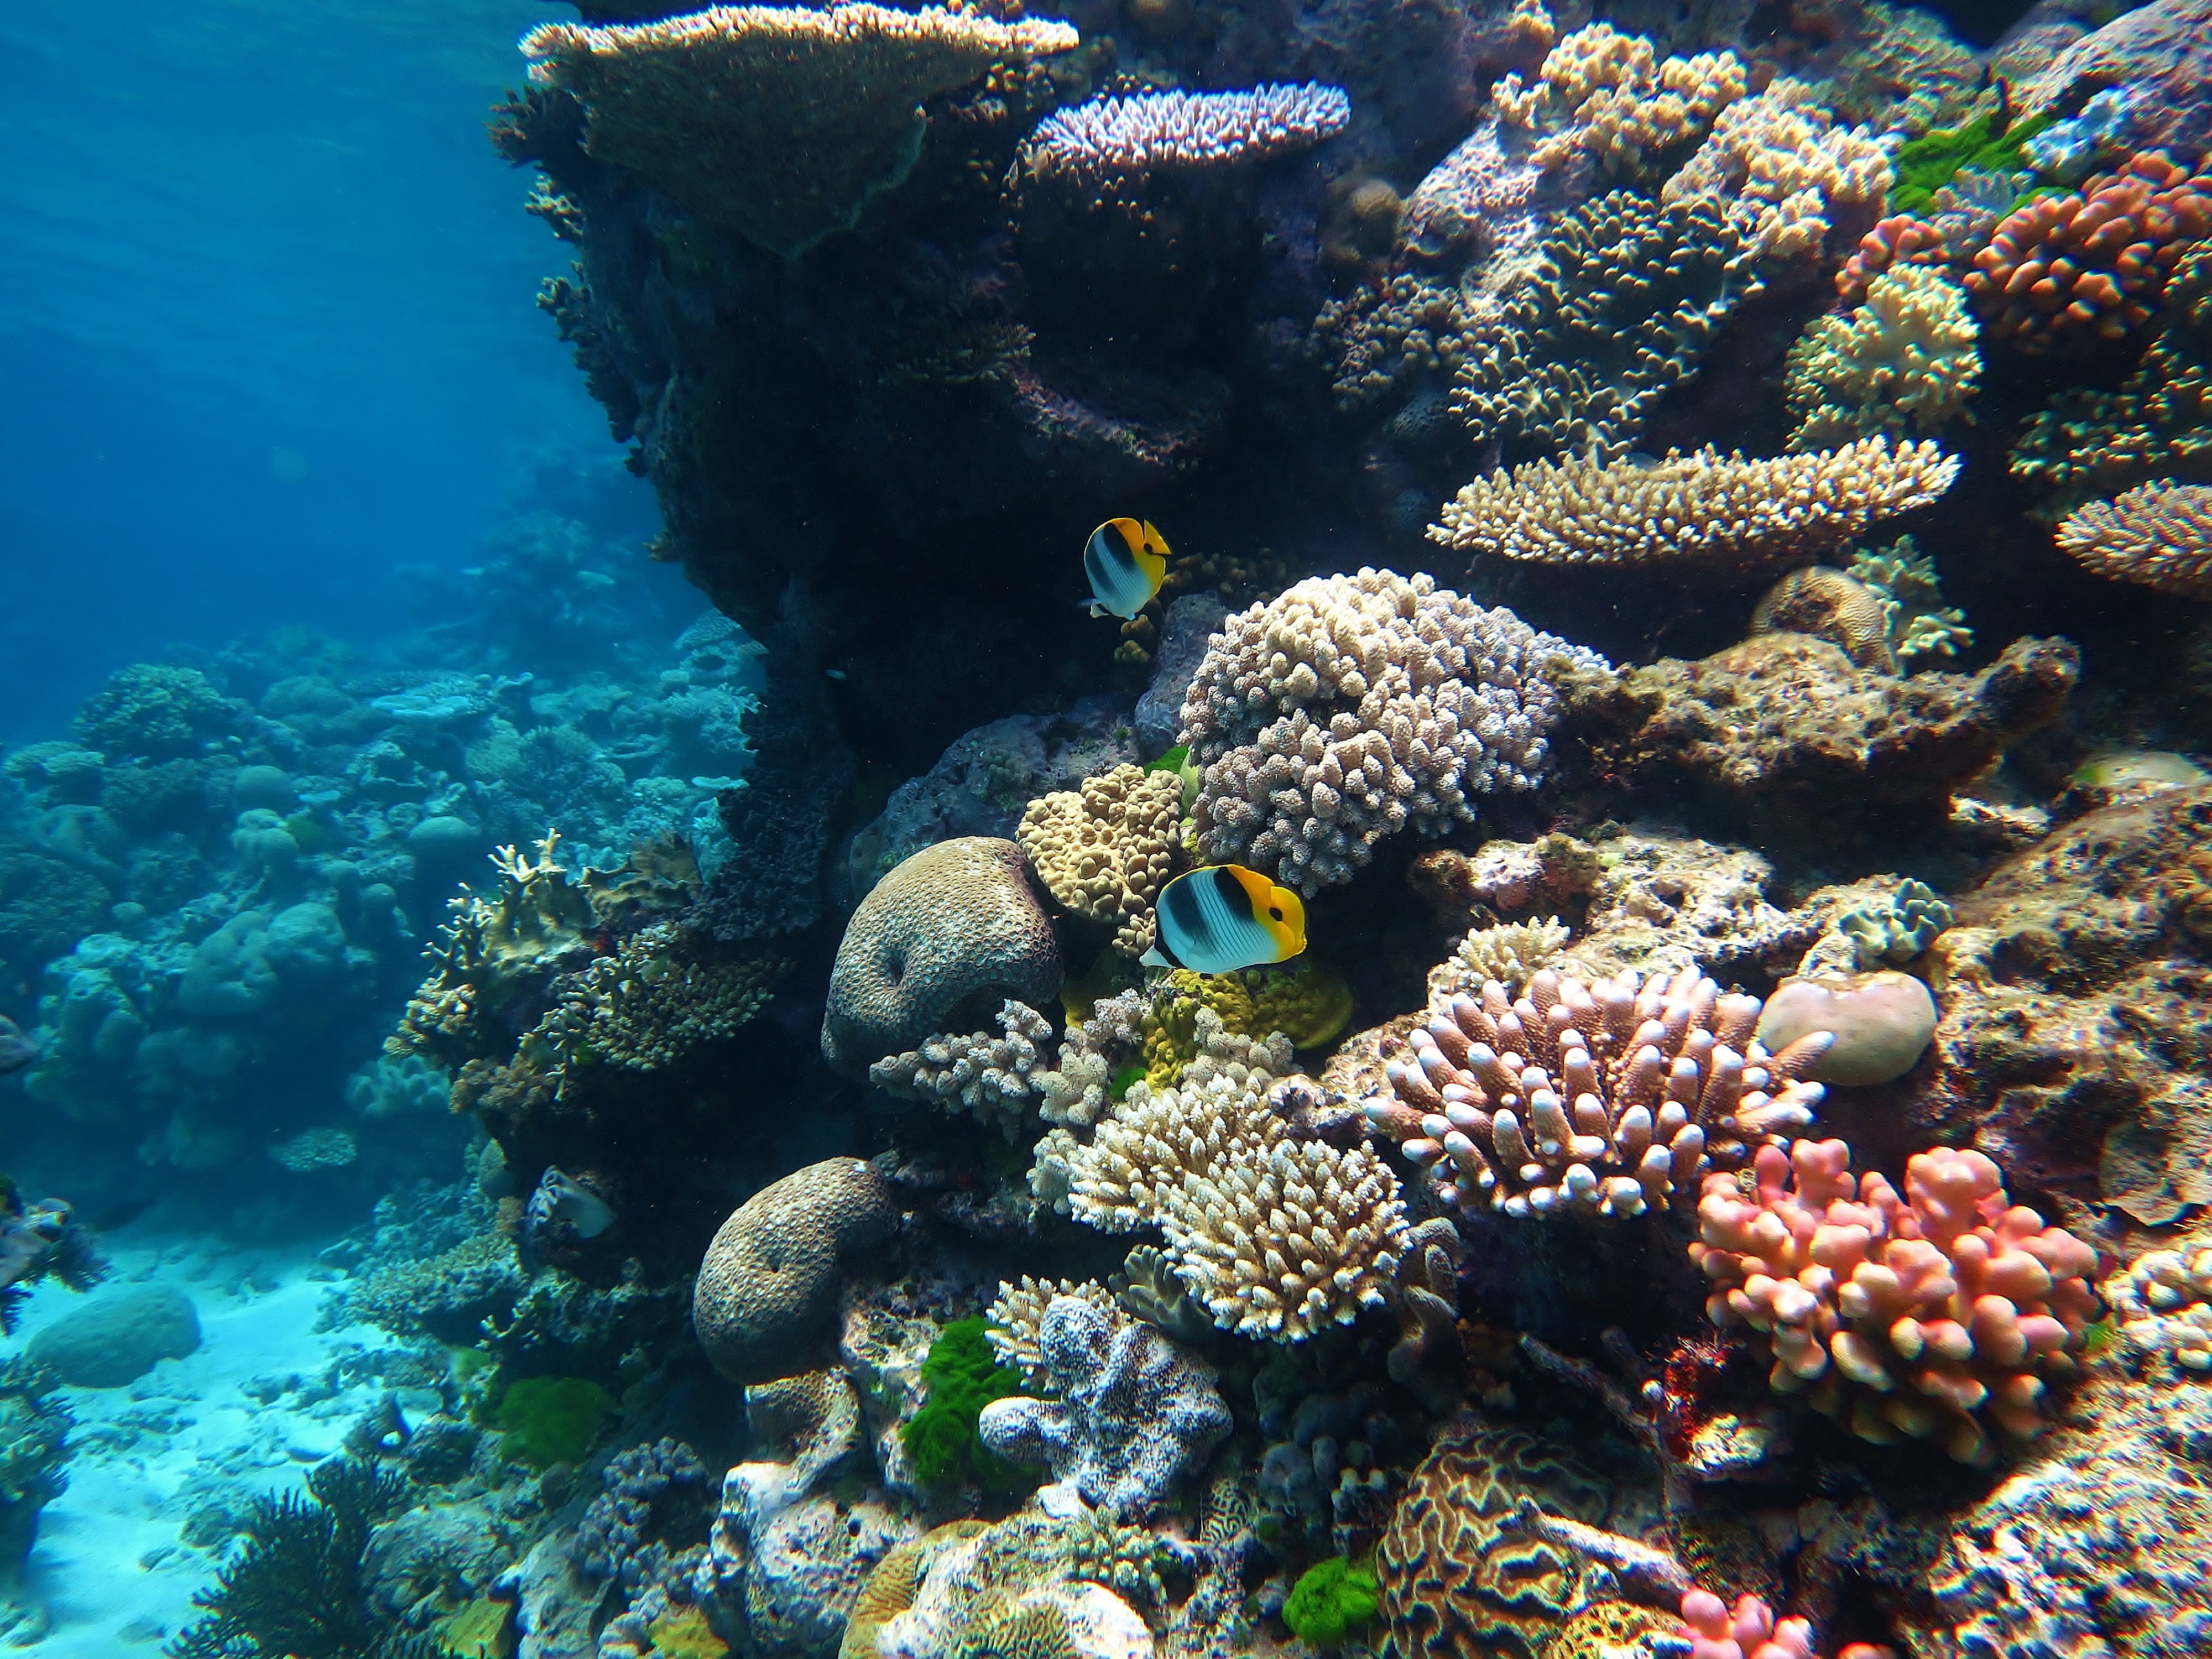 2- The Great Barrier Reef (Australia)